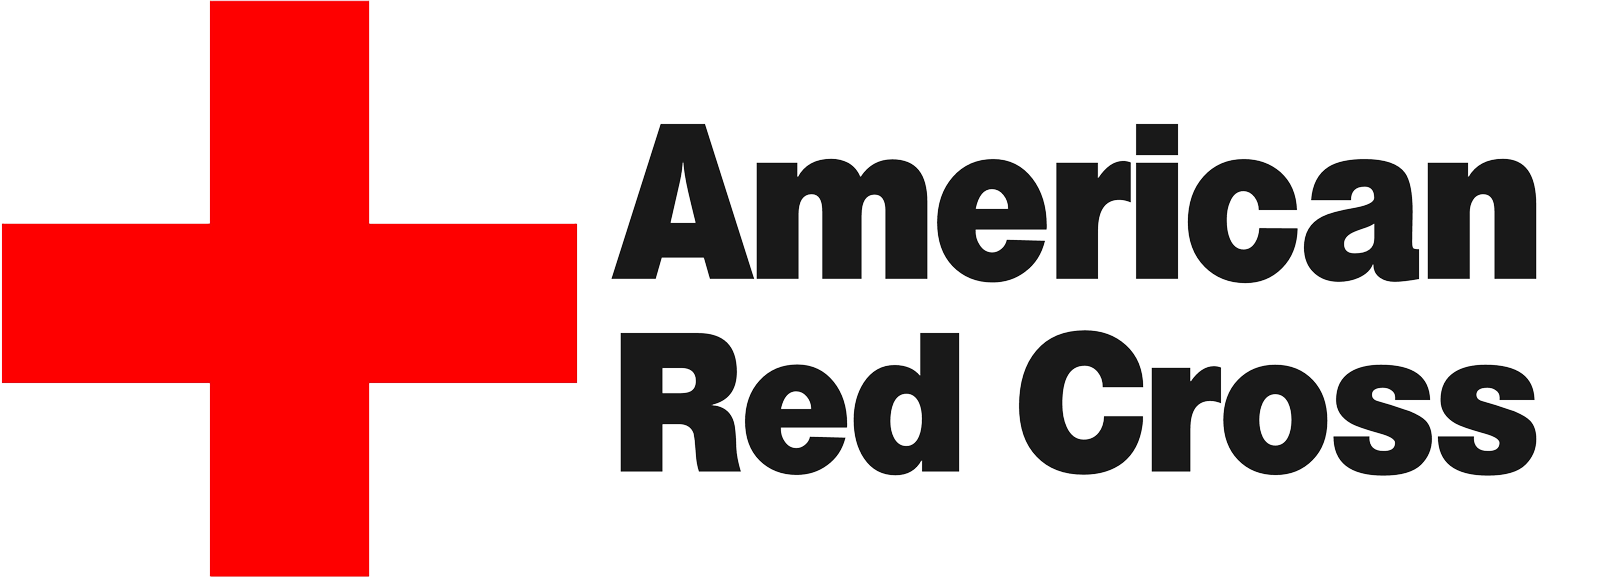 American Red Cross Blood Donation Organization Volunteering Blood